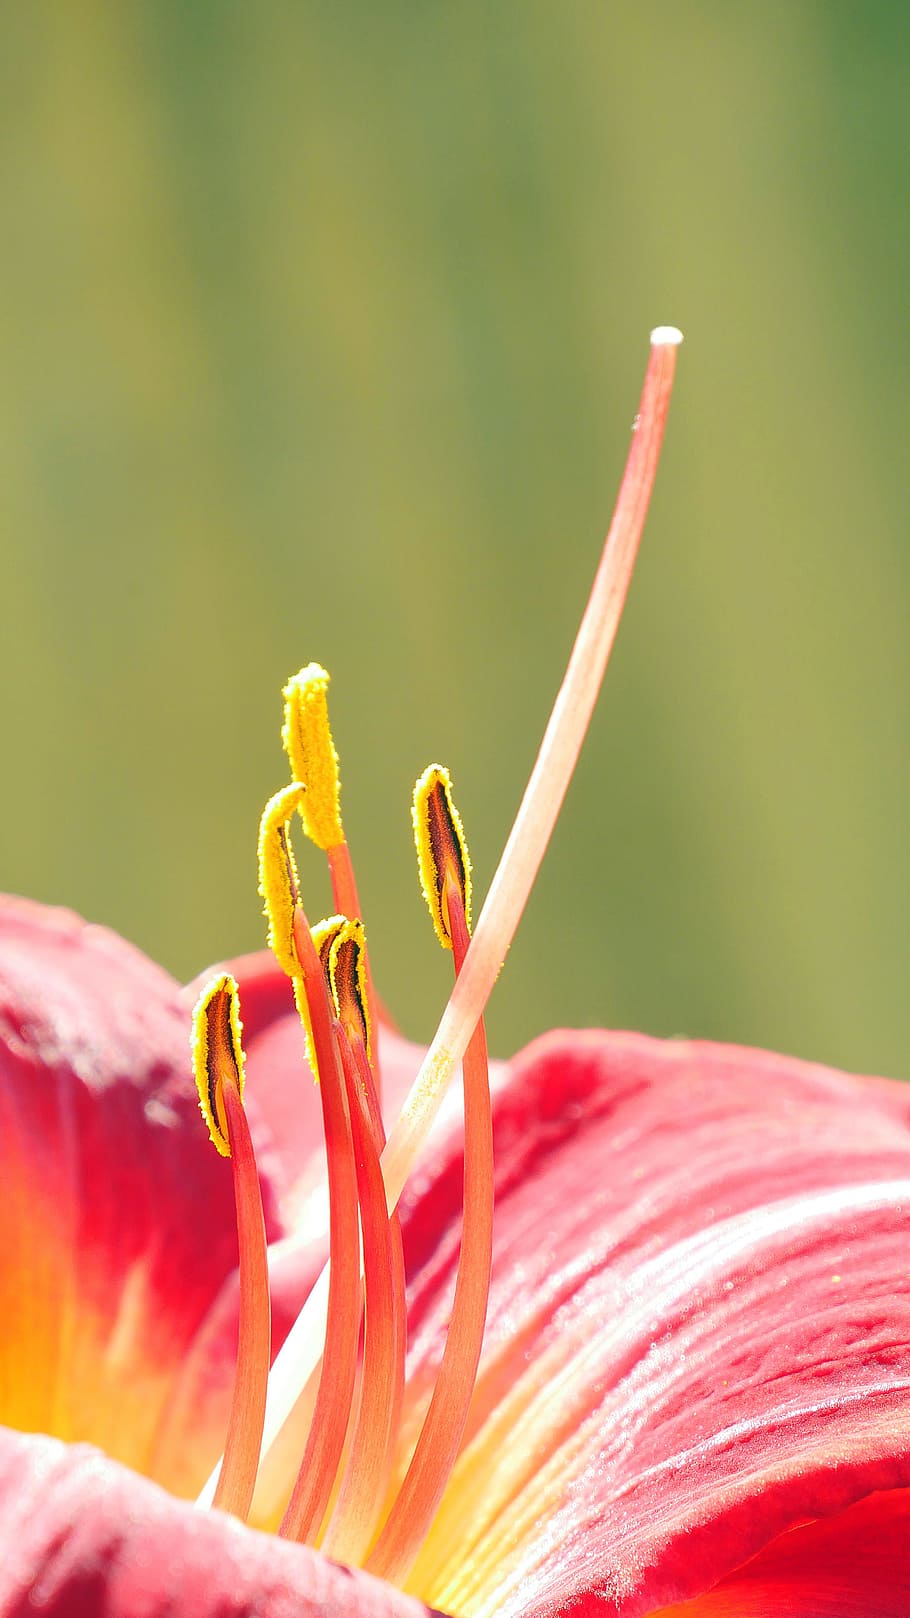 makro bagian bunga merah, daylily, waktu musim panas, taman rutgers nj usa, usa., fotografi makro, close-up, close-up ekstrim, gambar bunga, gambar putik